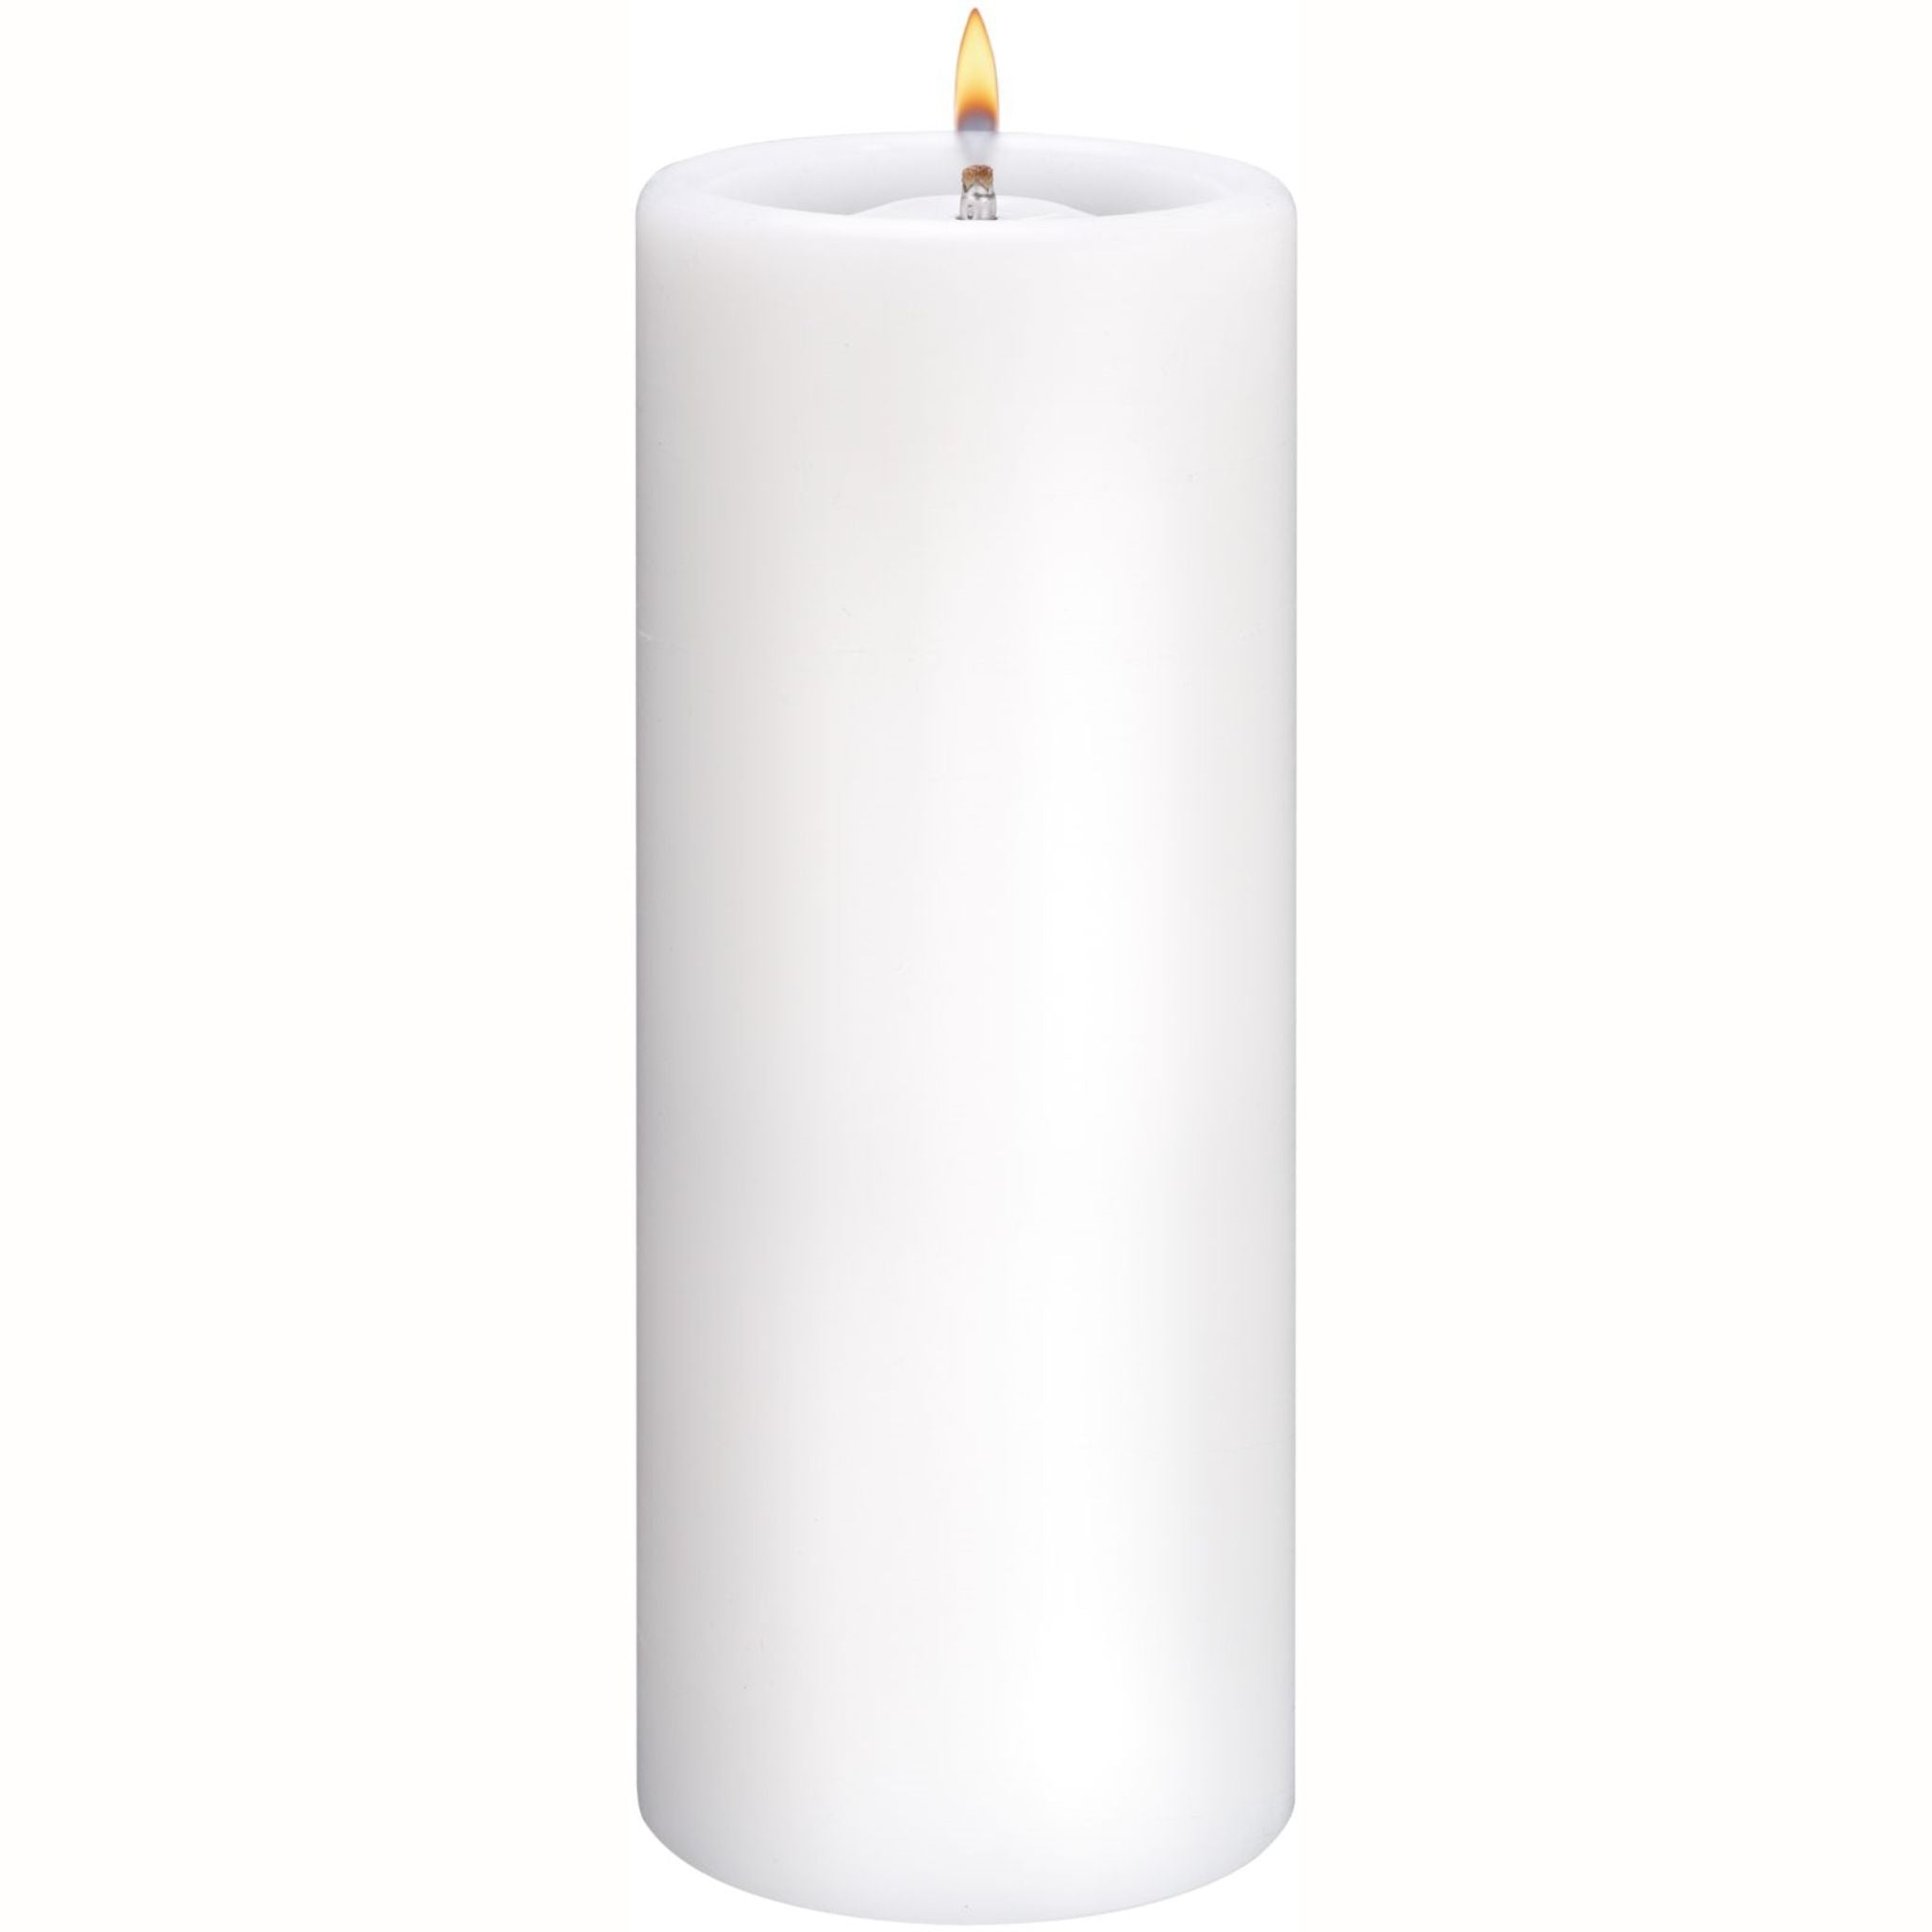 Safety candle for eternal burner 20AL 2 pieces